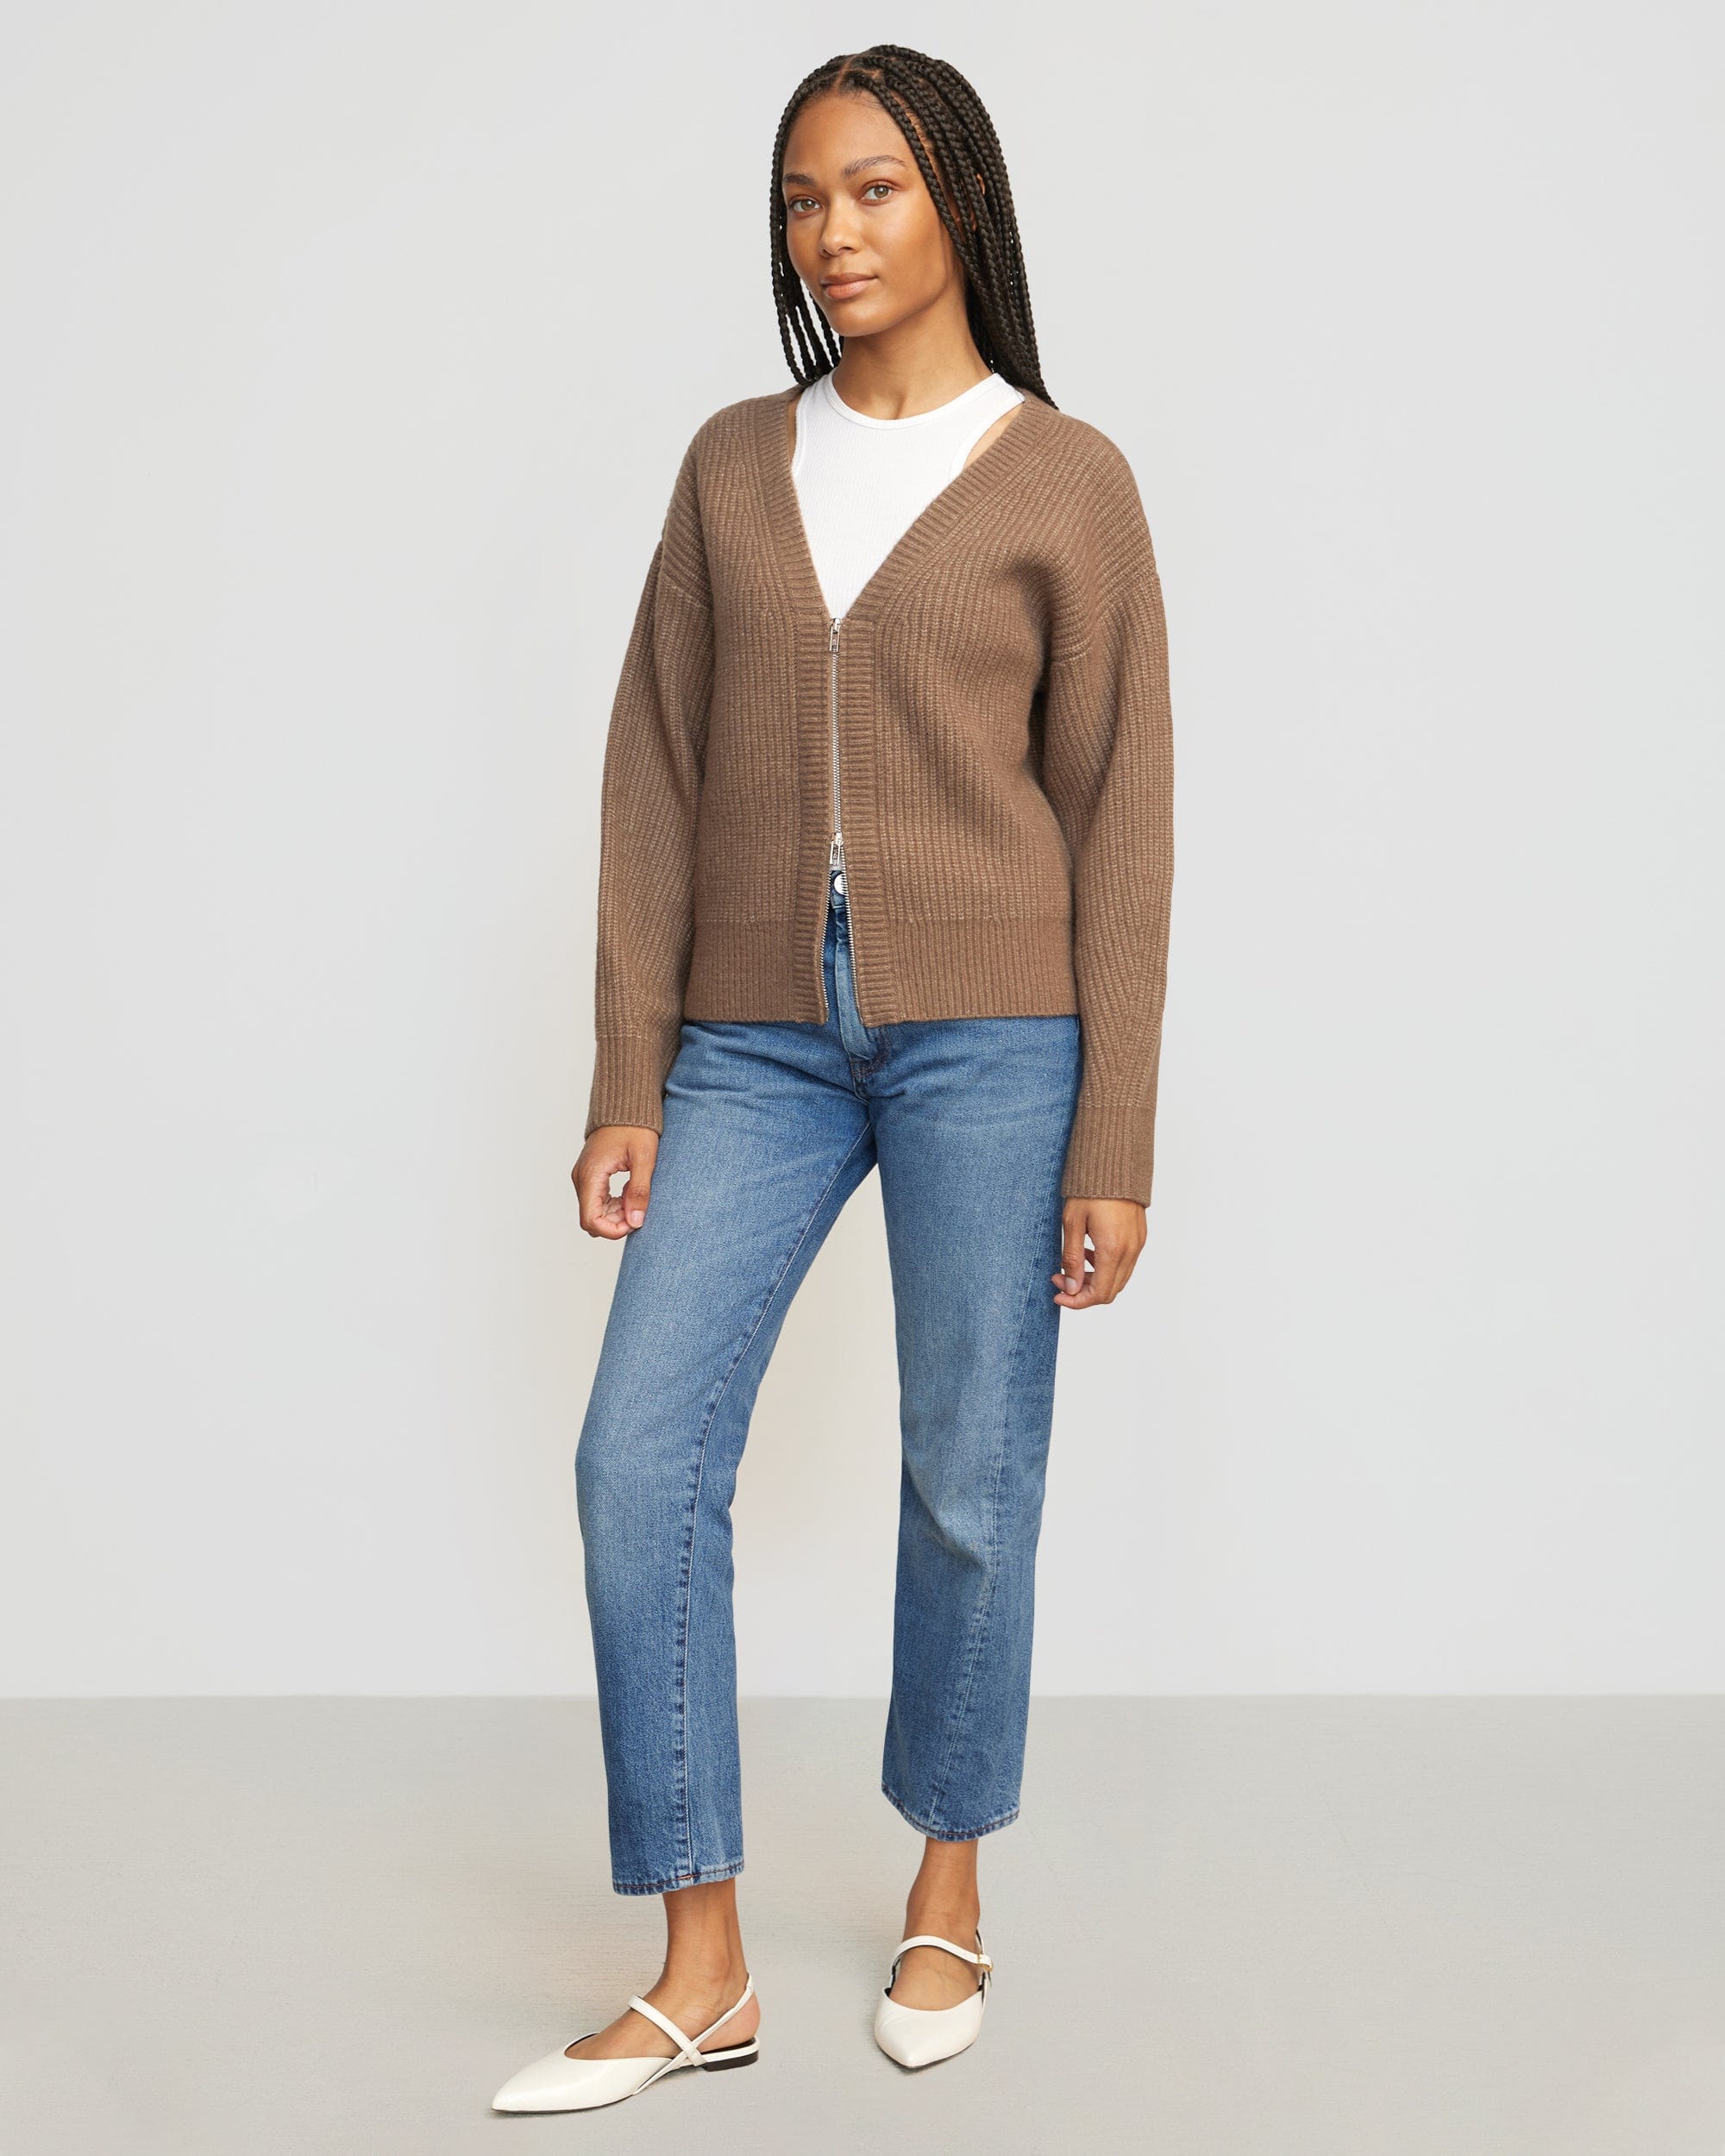 Quince Women's Heather Brown Oversized Cardigan Sweater sz XS